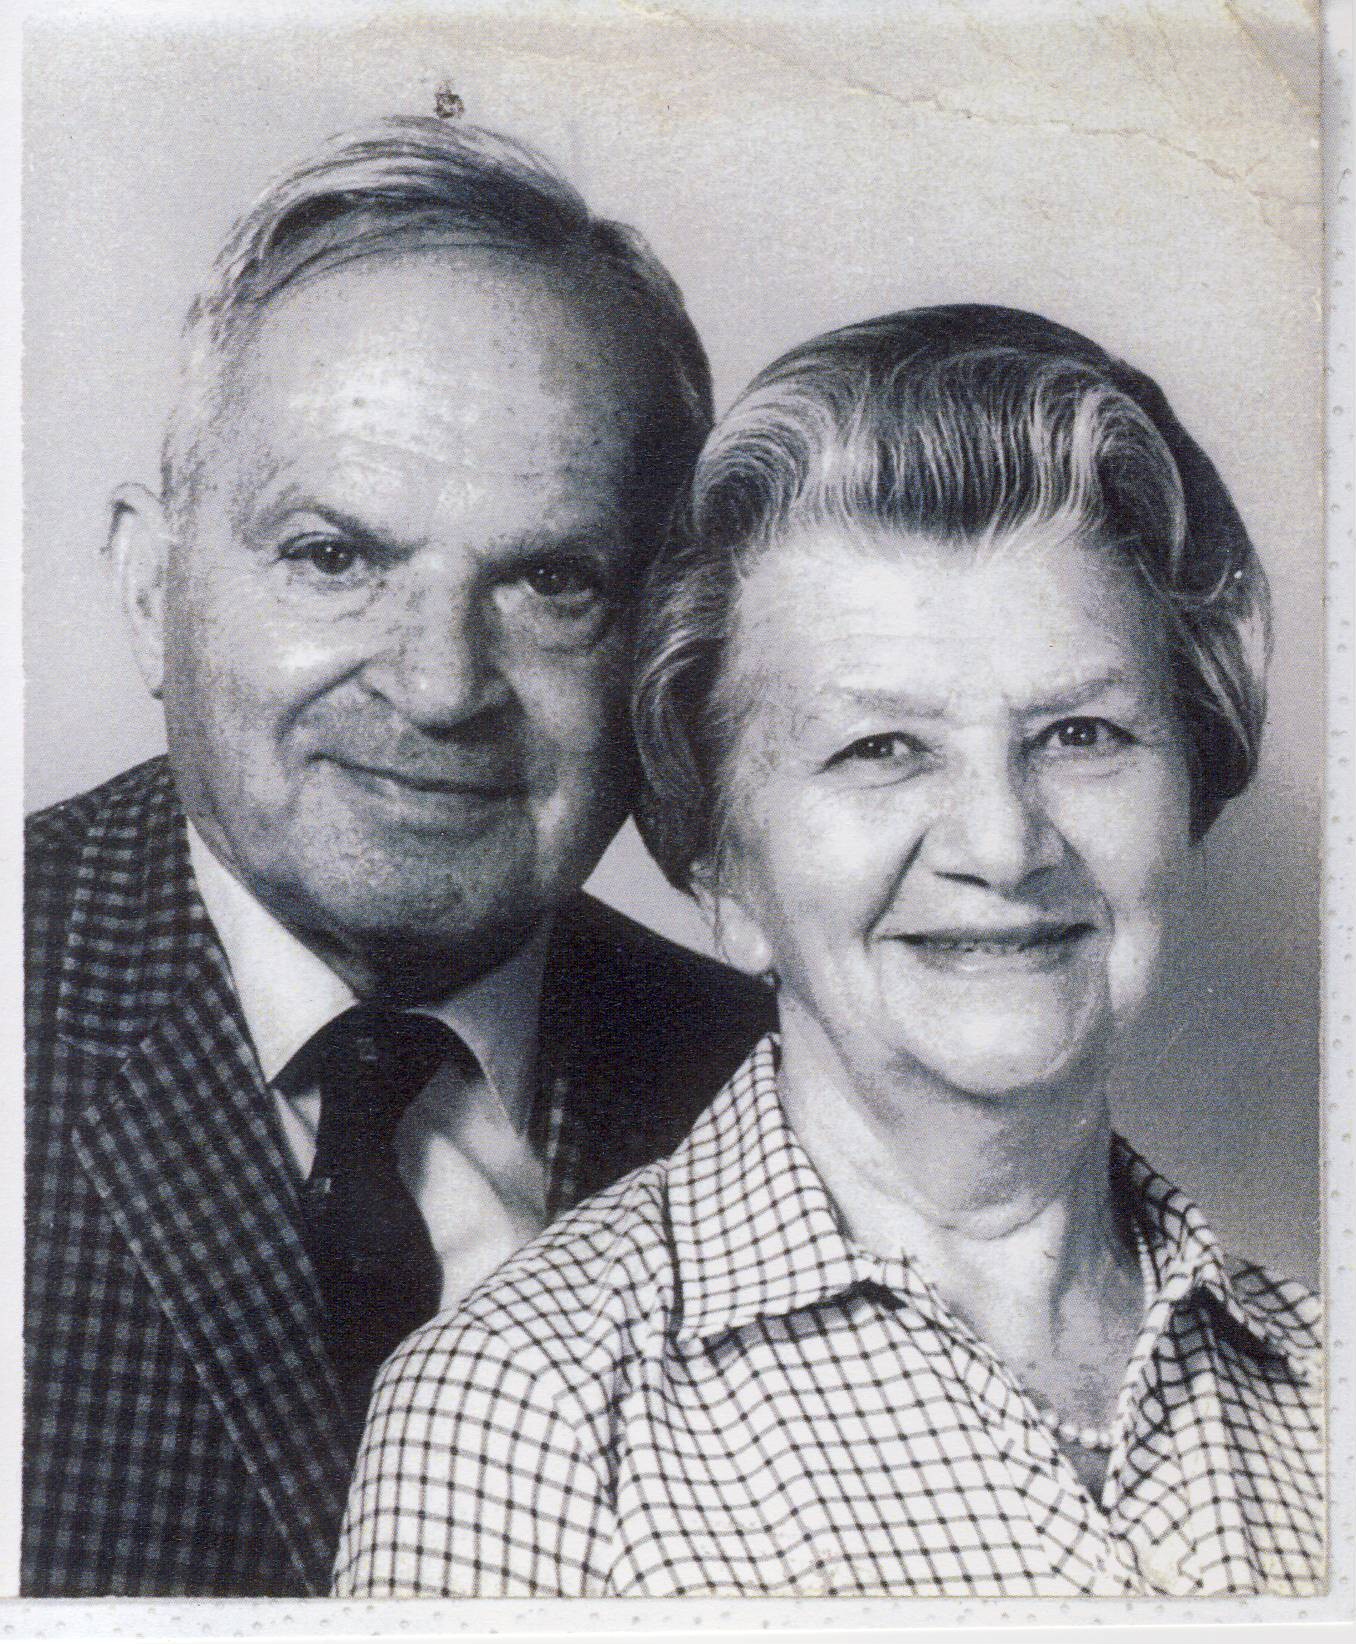 Curt and Gertrude Weiss